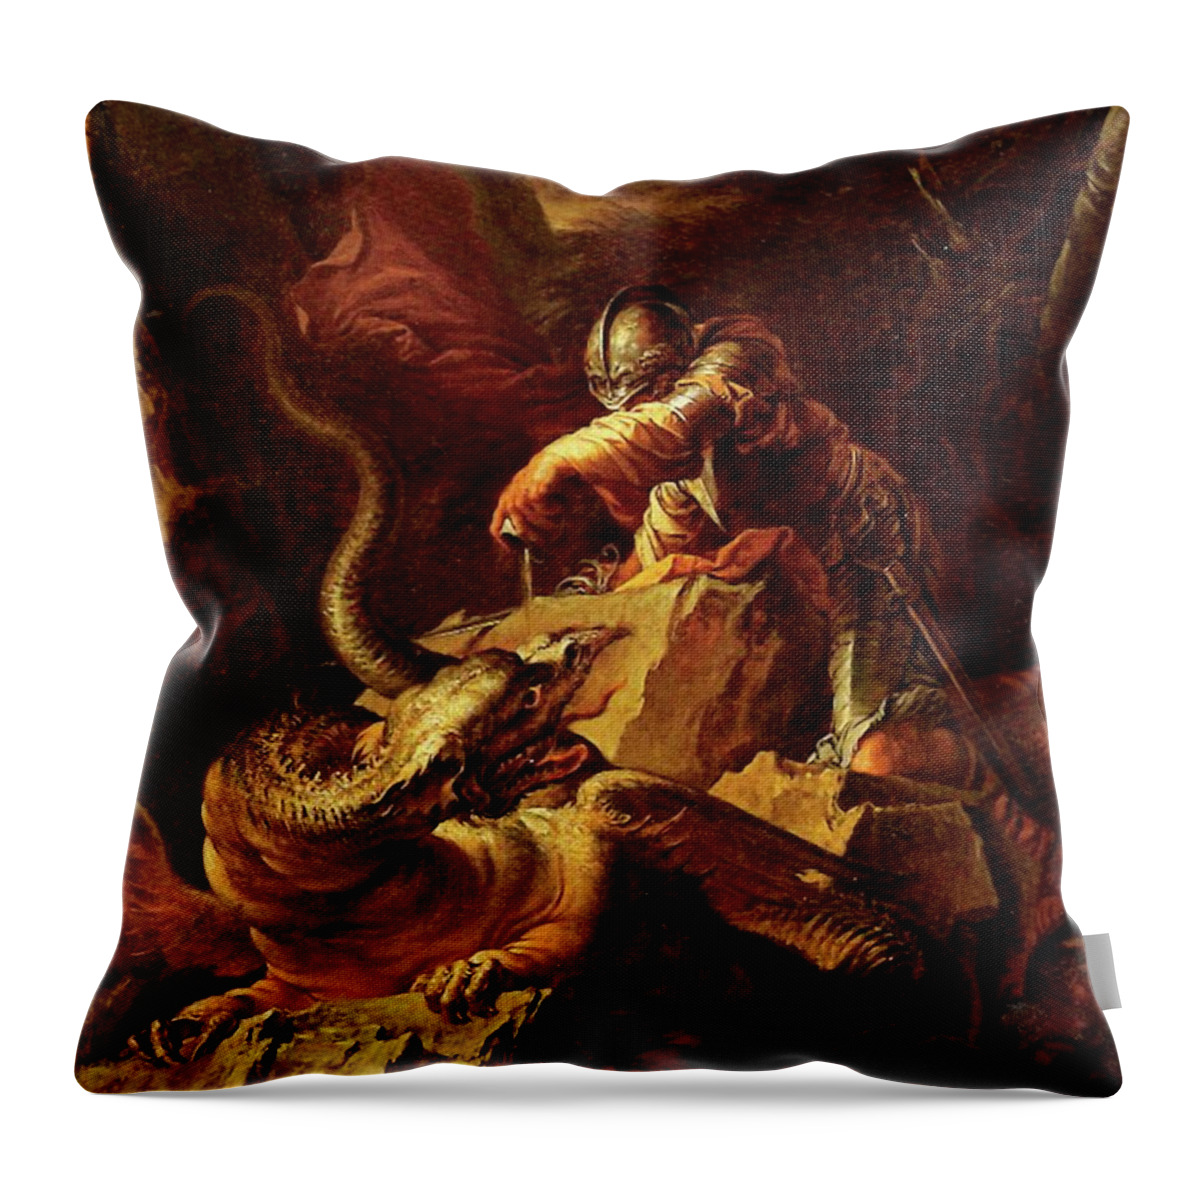 Jason Charming The Dragon Throw Pillow featuring the painting Jason Charming the Dragon by Salvator Rosa